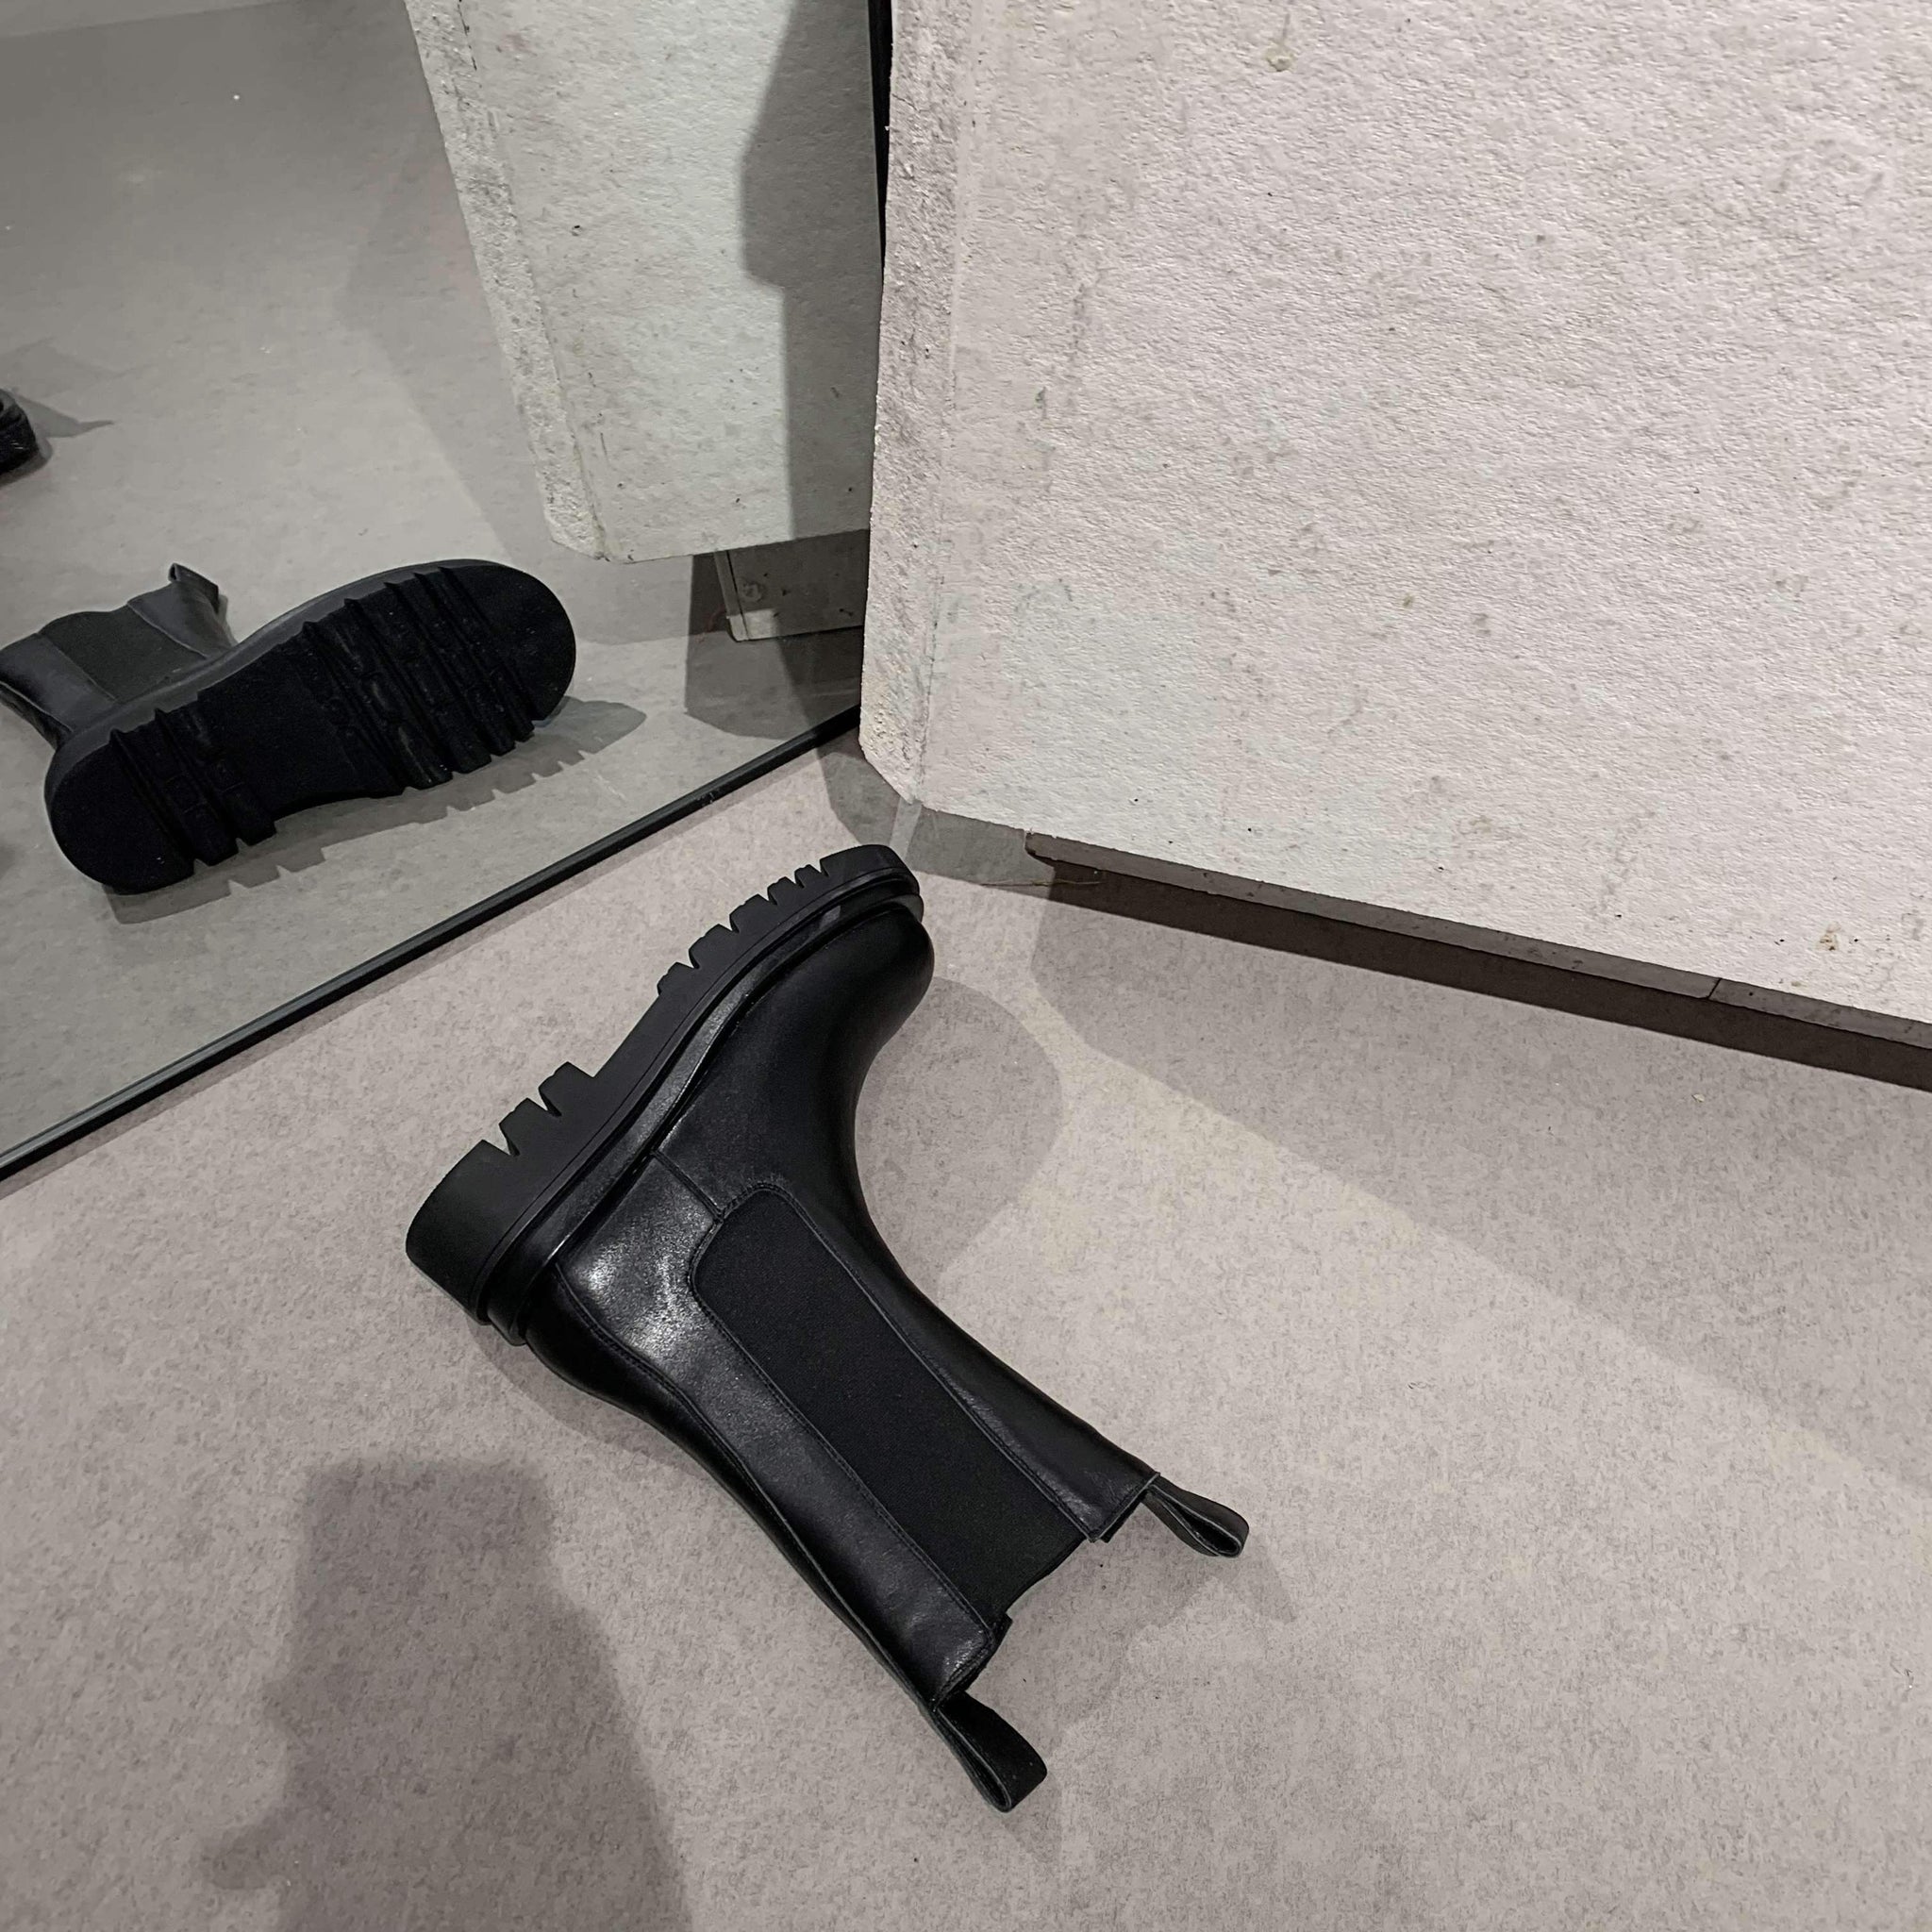 Handmade Leather Slip On Platform Boots